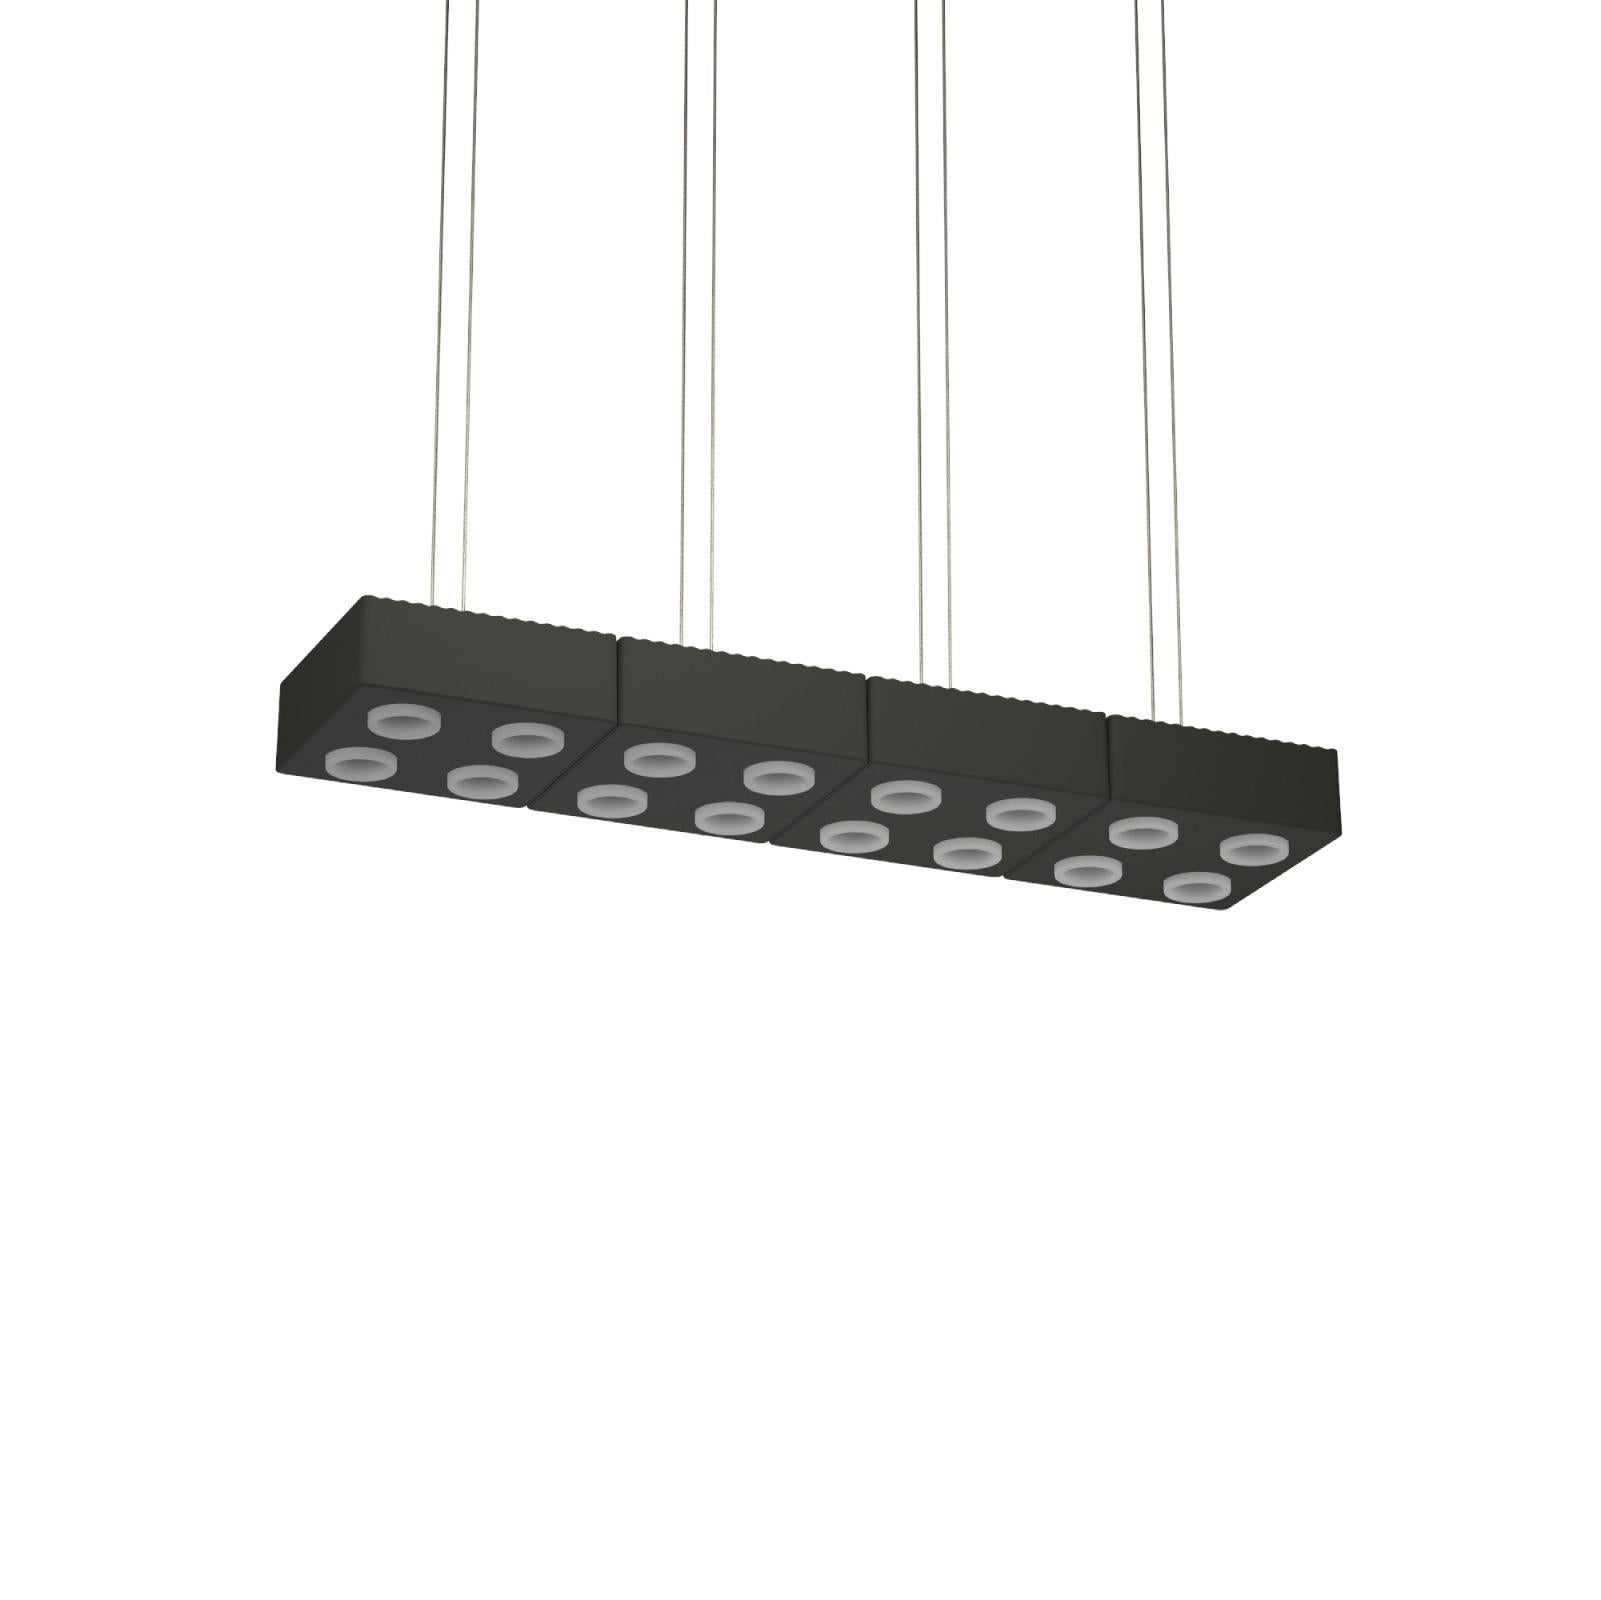 Domino Pendant lamp by Sylvain Willenz x AGO Lighting
Charcoal - Quad Pendant Lamp

Materials: Aluminum 
Light Source: Integrated LED (COB), DC
Watt. 60 W (15W x 4)
Color temp. 2700 / 3000K
Cable Length: 3m 

Available colors:
Charcoal,